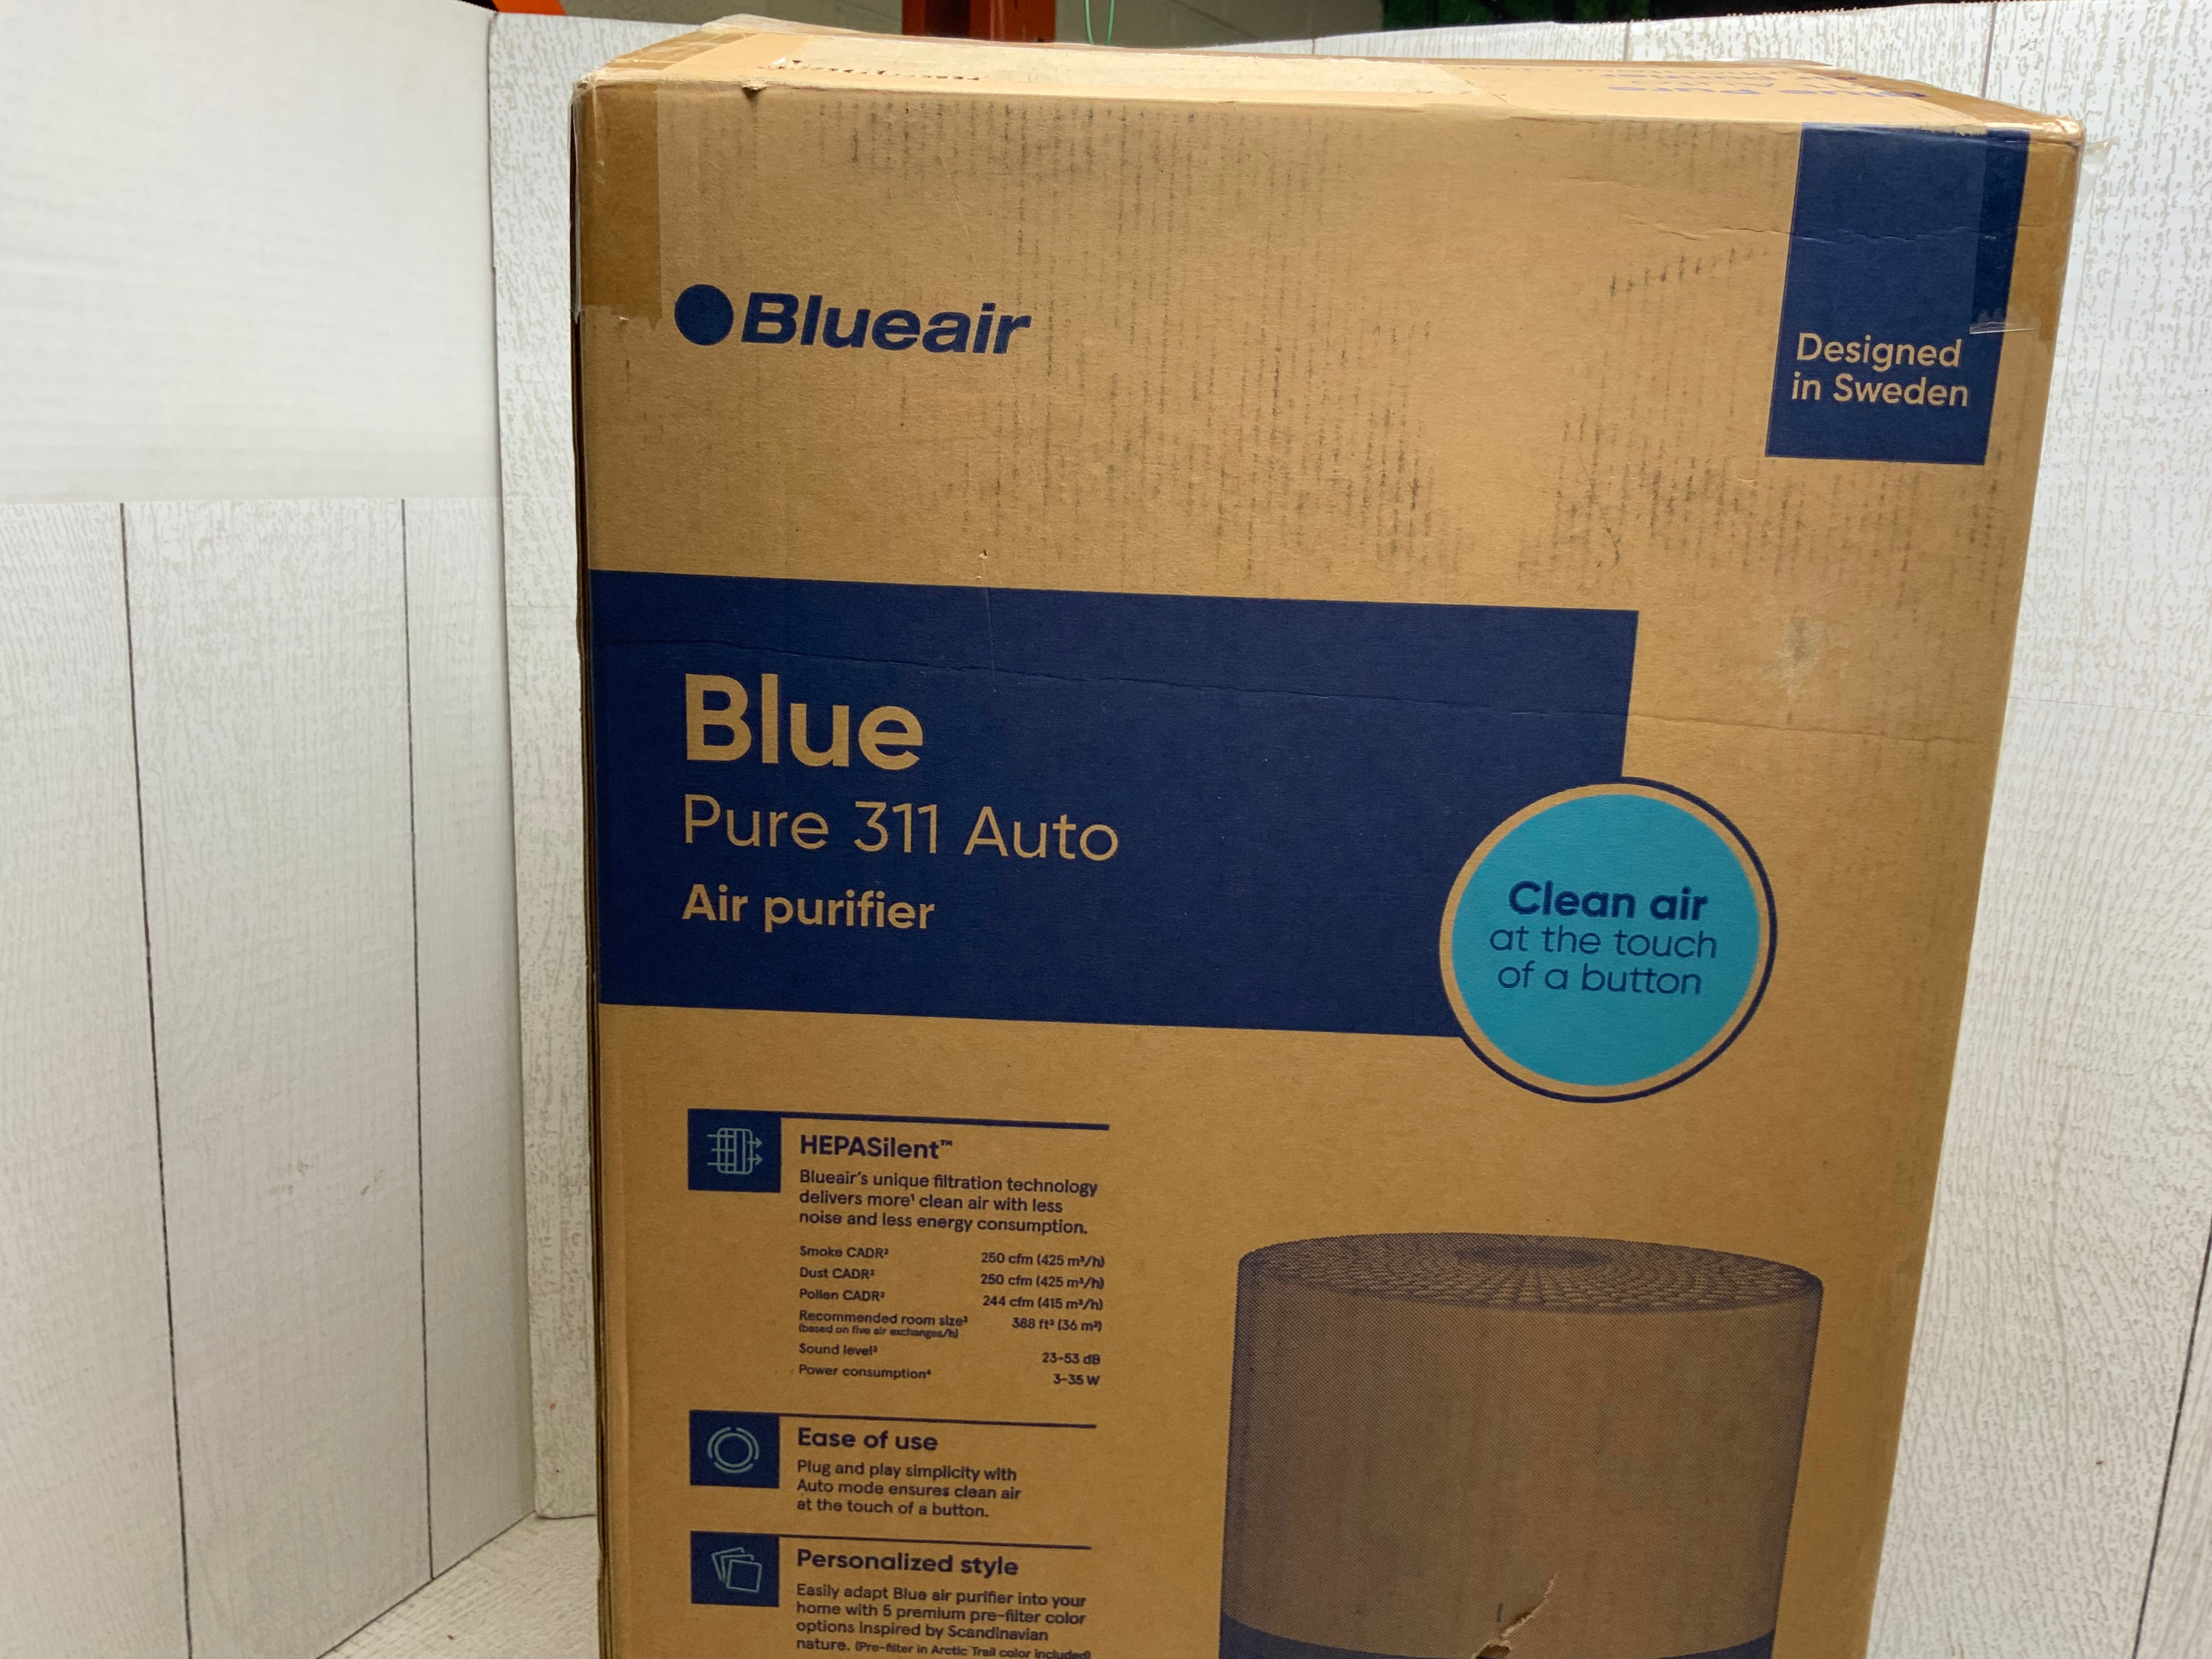 BLUEAIR Bedroom Air Purifier, Medium Room, Blue 311 Auto (8064479133934)